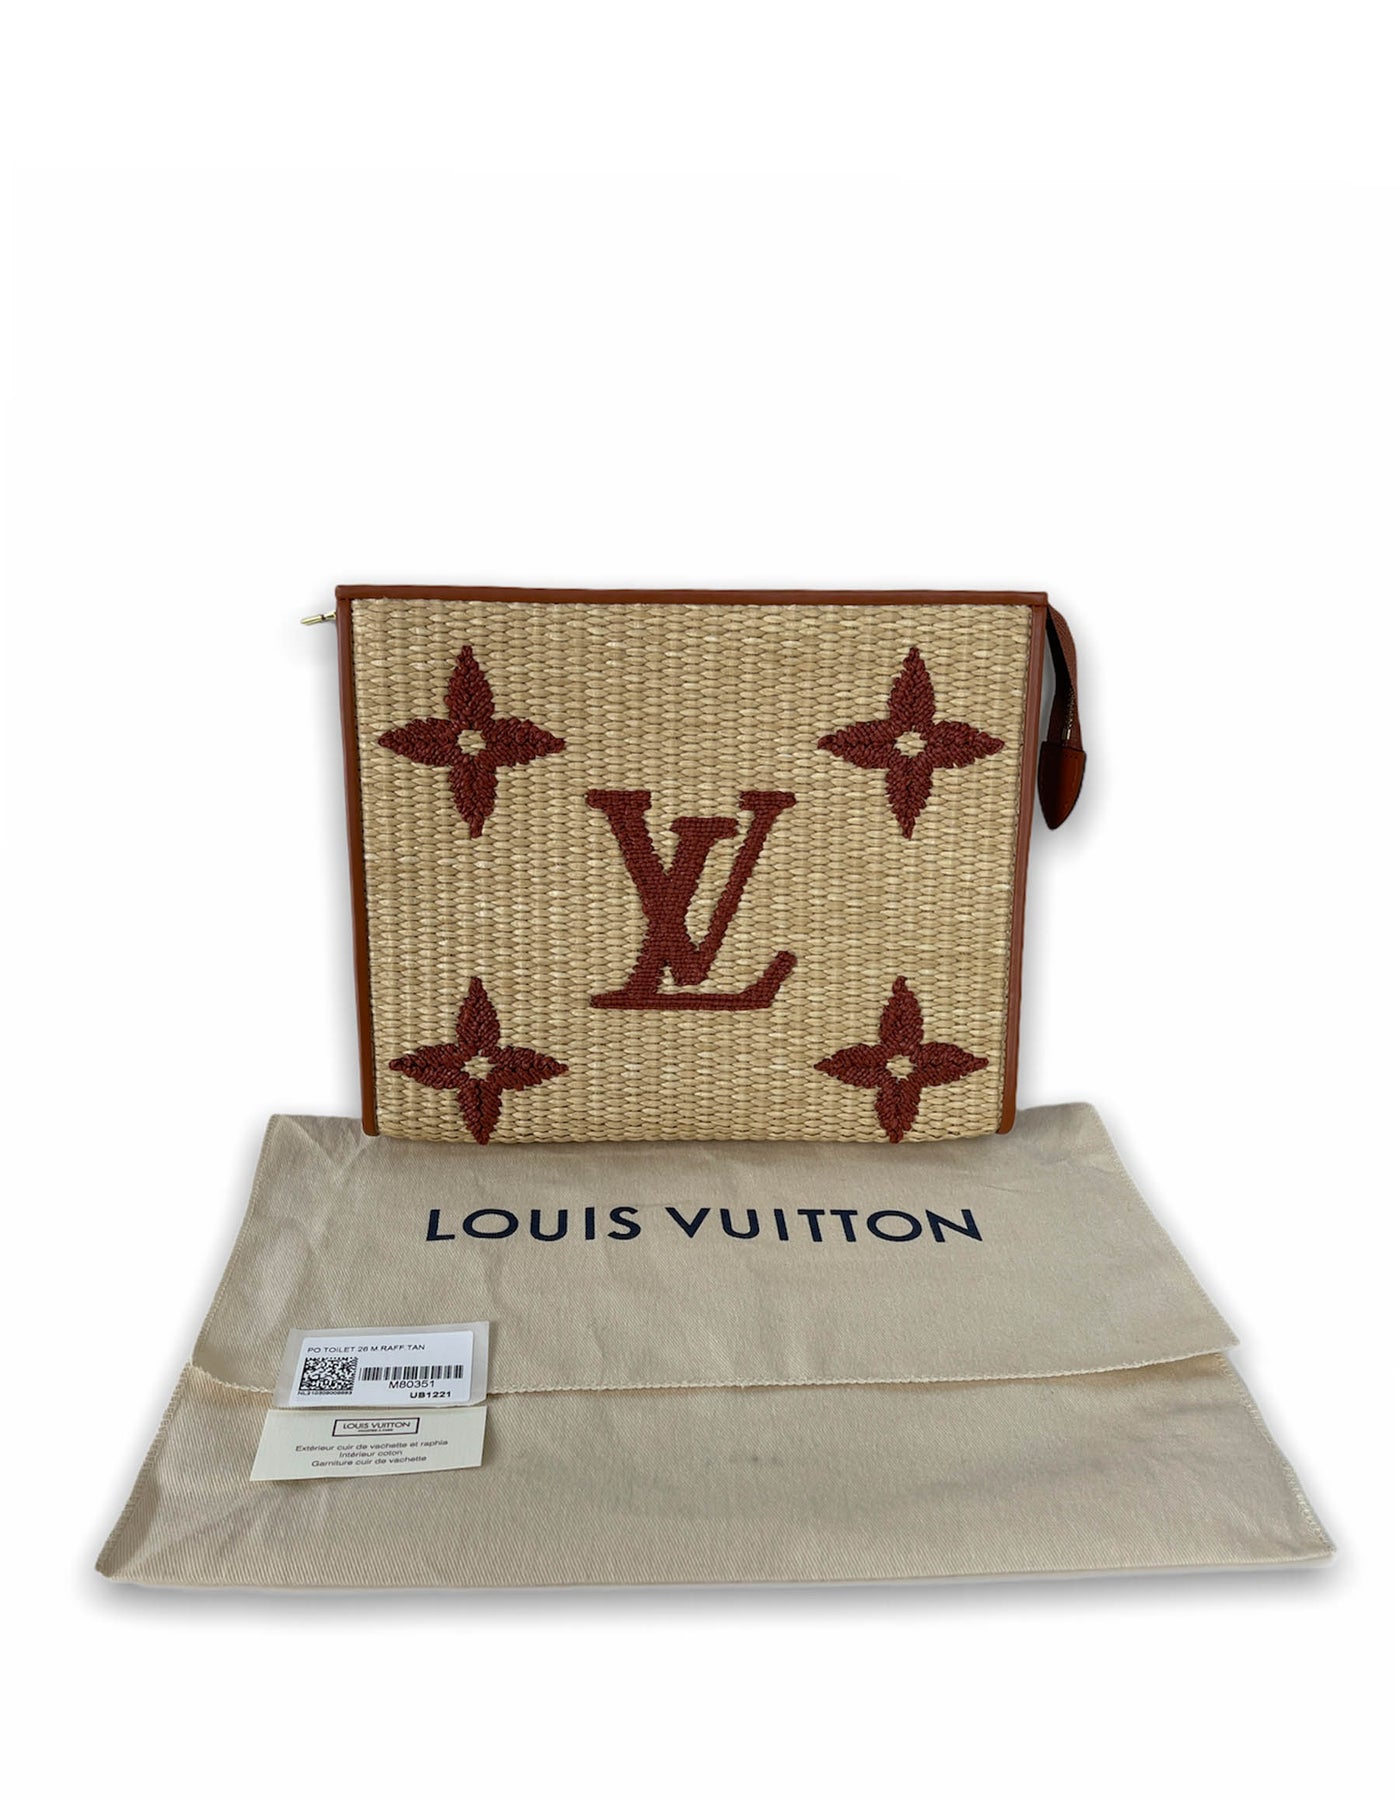 Louis Vuitton Tan/Raffia Giant Monogram Large Toiletry 26 Cosmetic